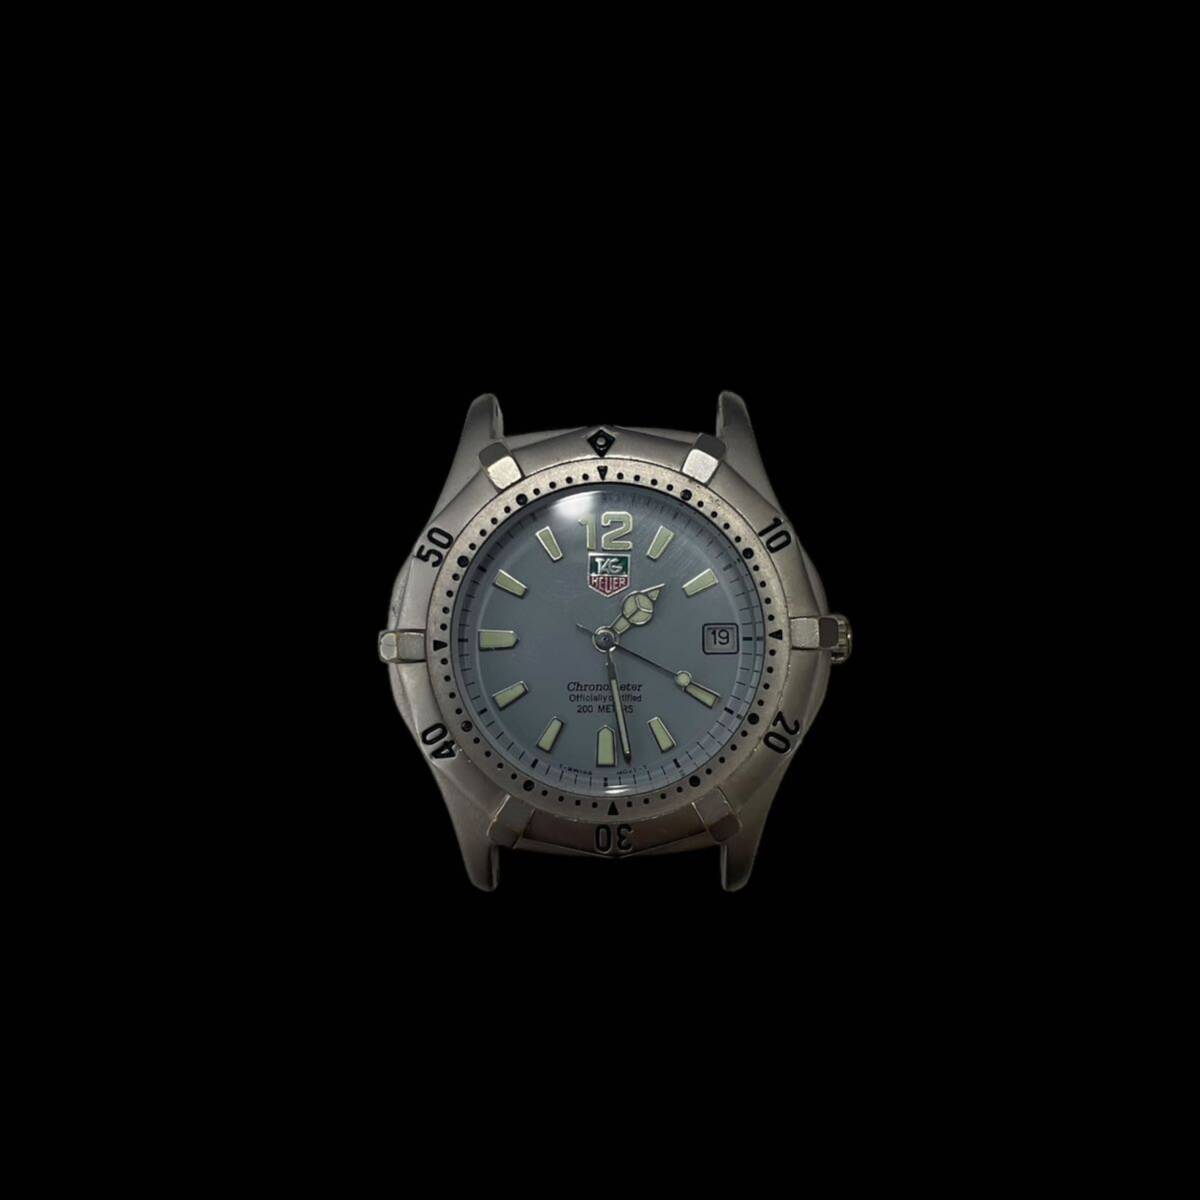  operation goods TAG Heuer TAG Heuer wristwatch Chrono meter Date 200M reverse side ske self-winding watch men's custom?